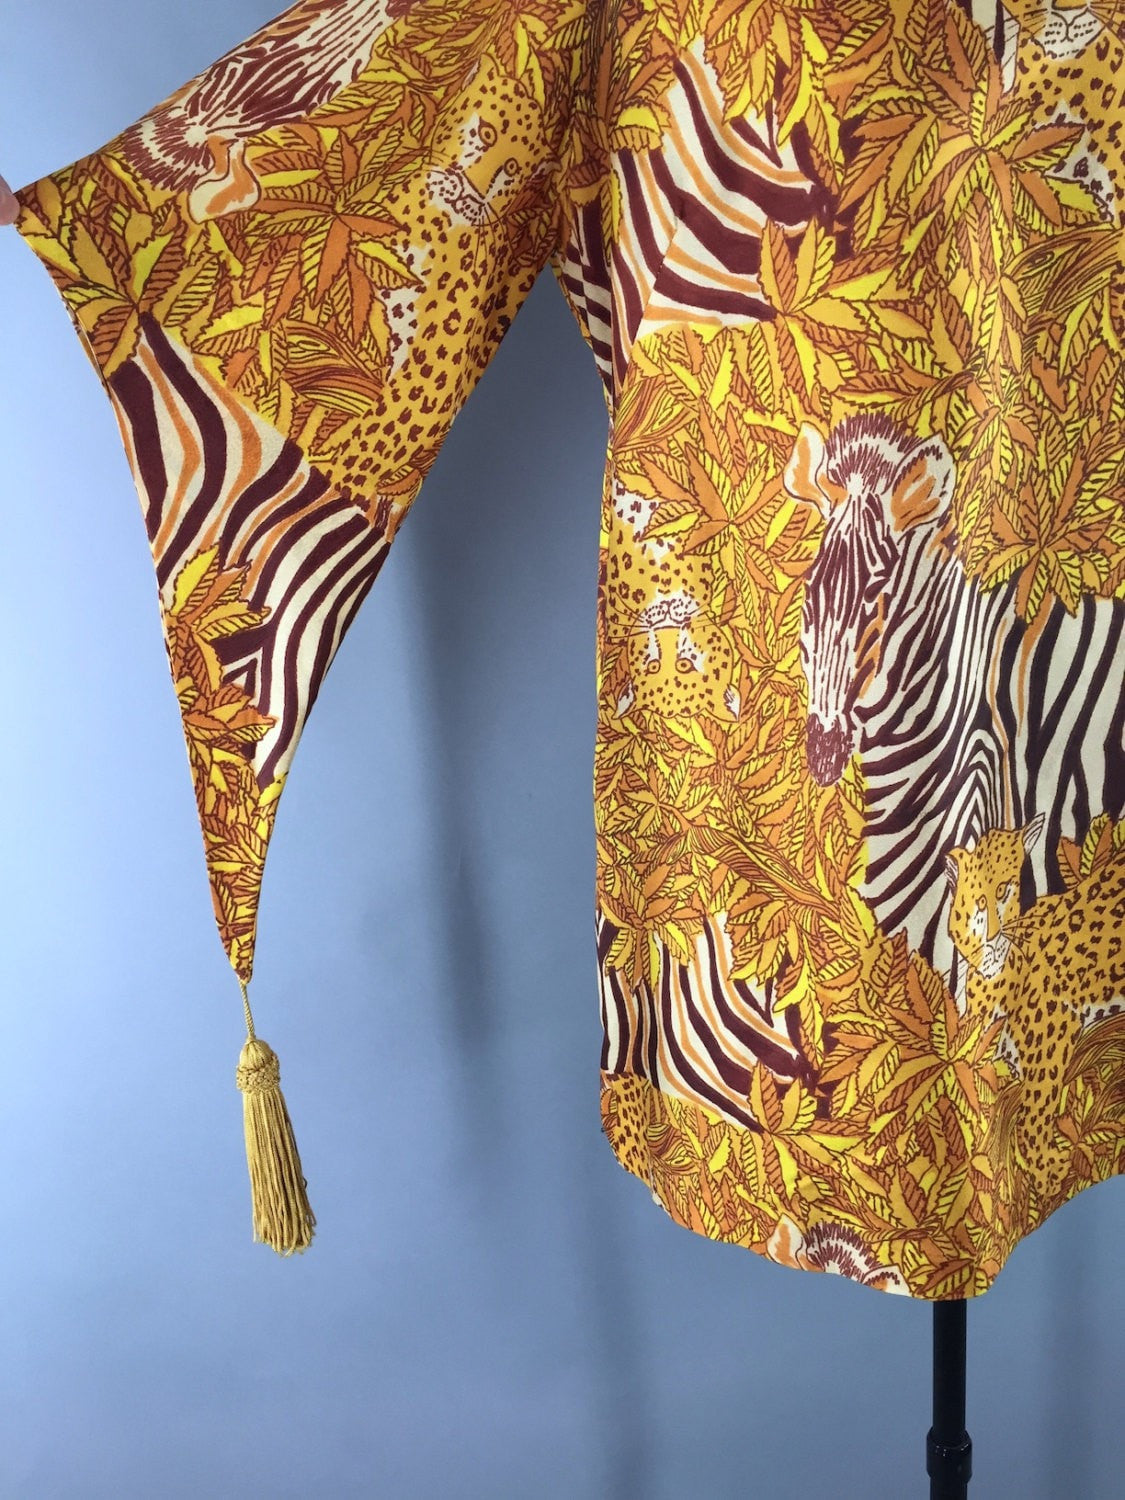 Vintage 1970s Dress / Novelty Print Safari Tunic - ThisBlueBird